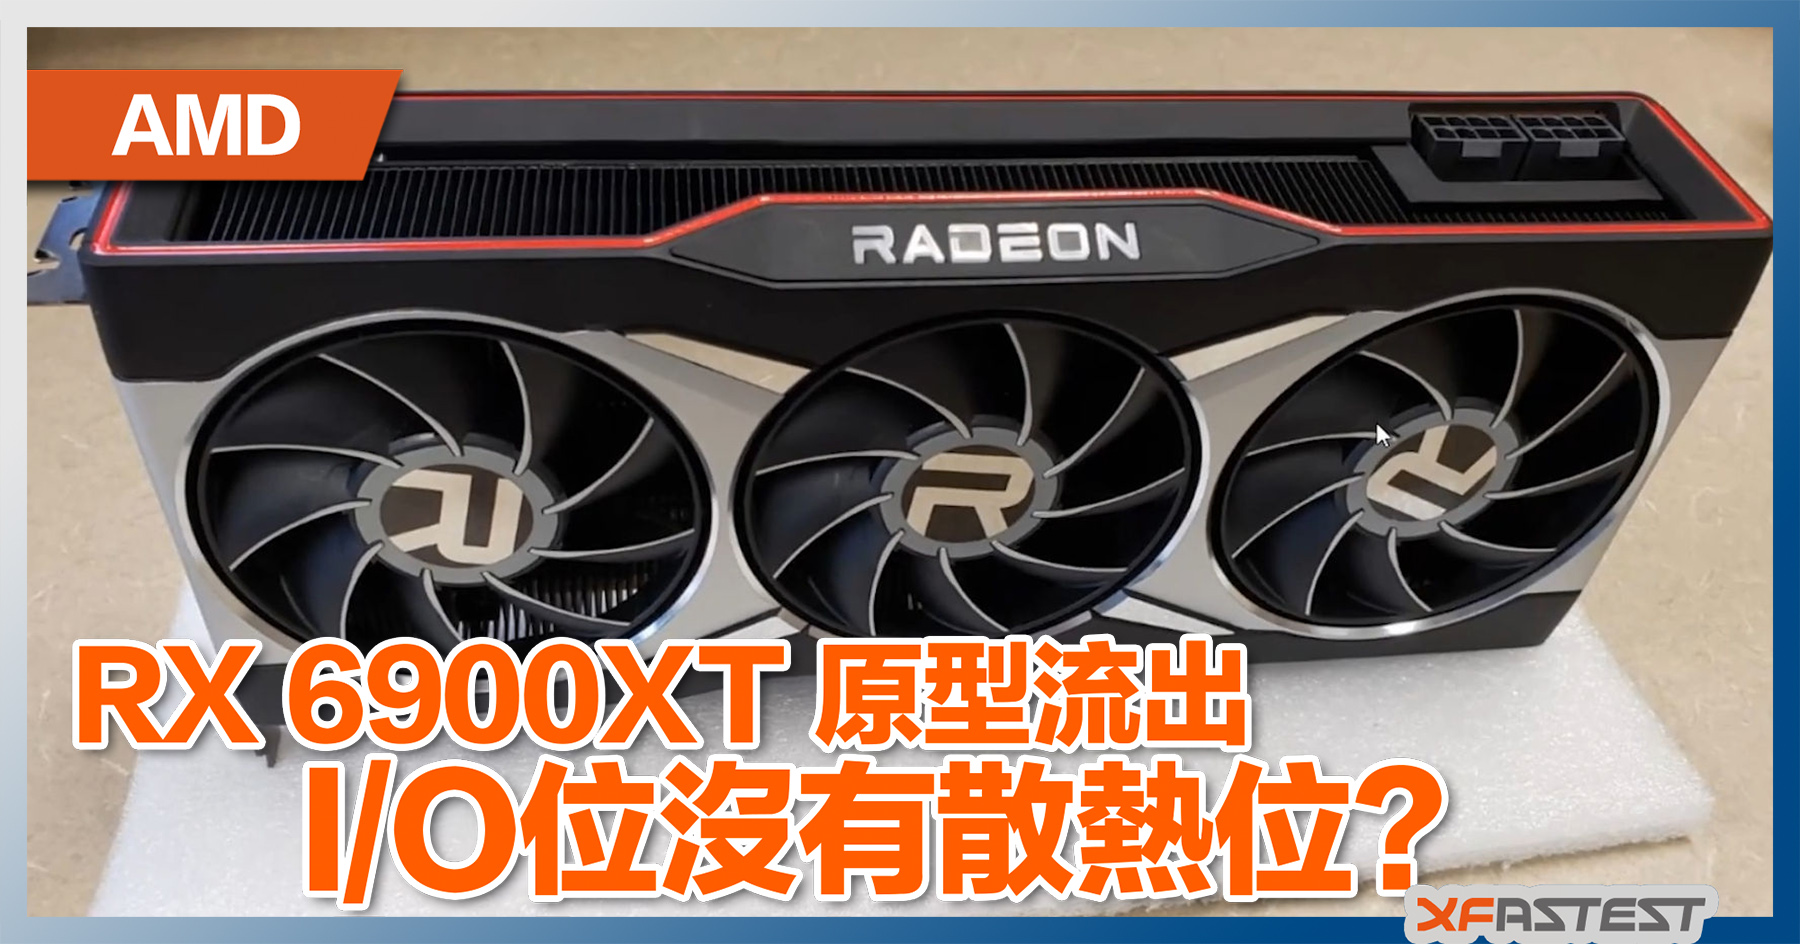 AMD Radeon RX 6900XT 原型模樣再次流出- XFastest Hong Kong